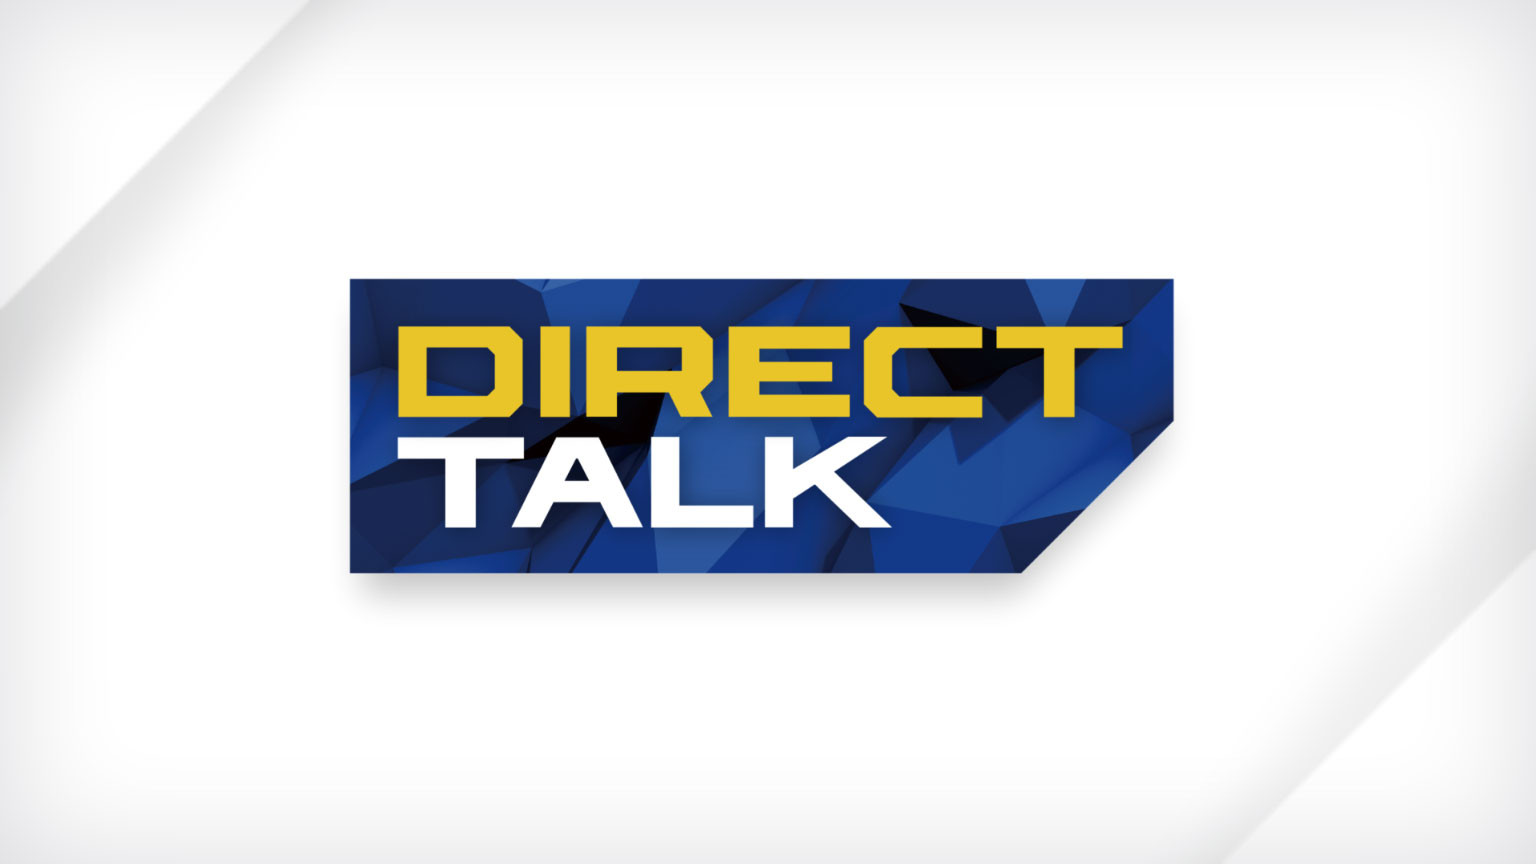 Trò chuyện trực tiếp
Direct Talk